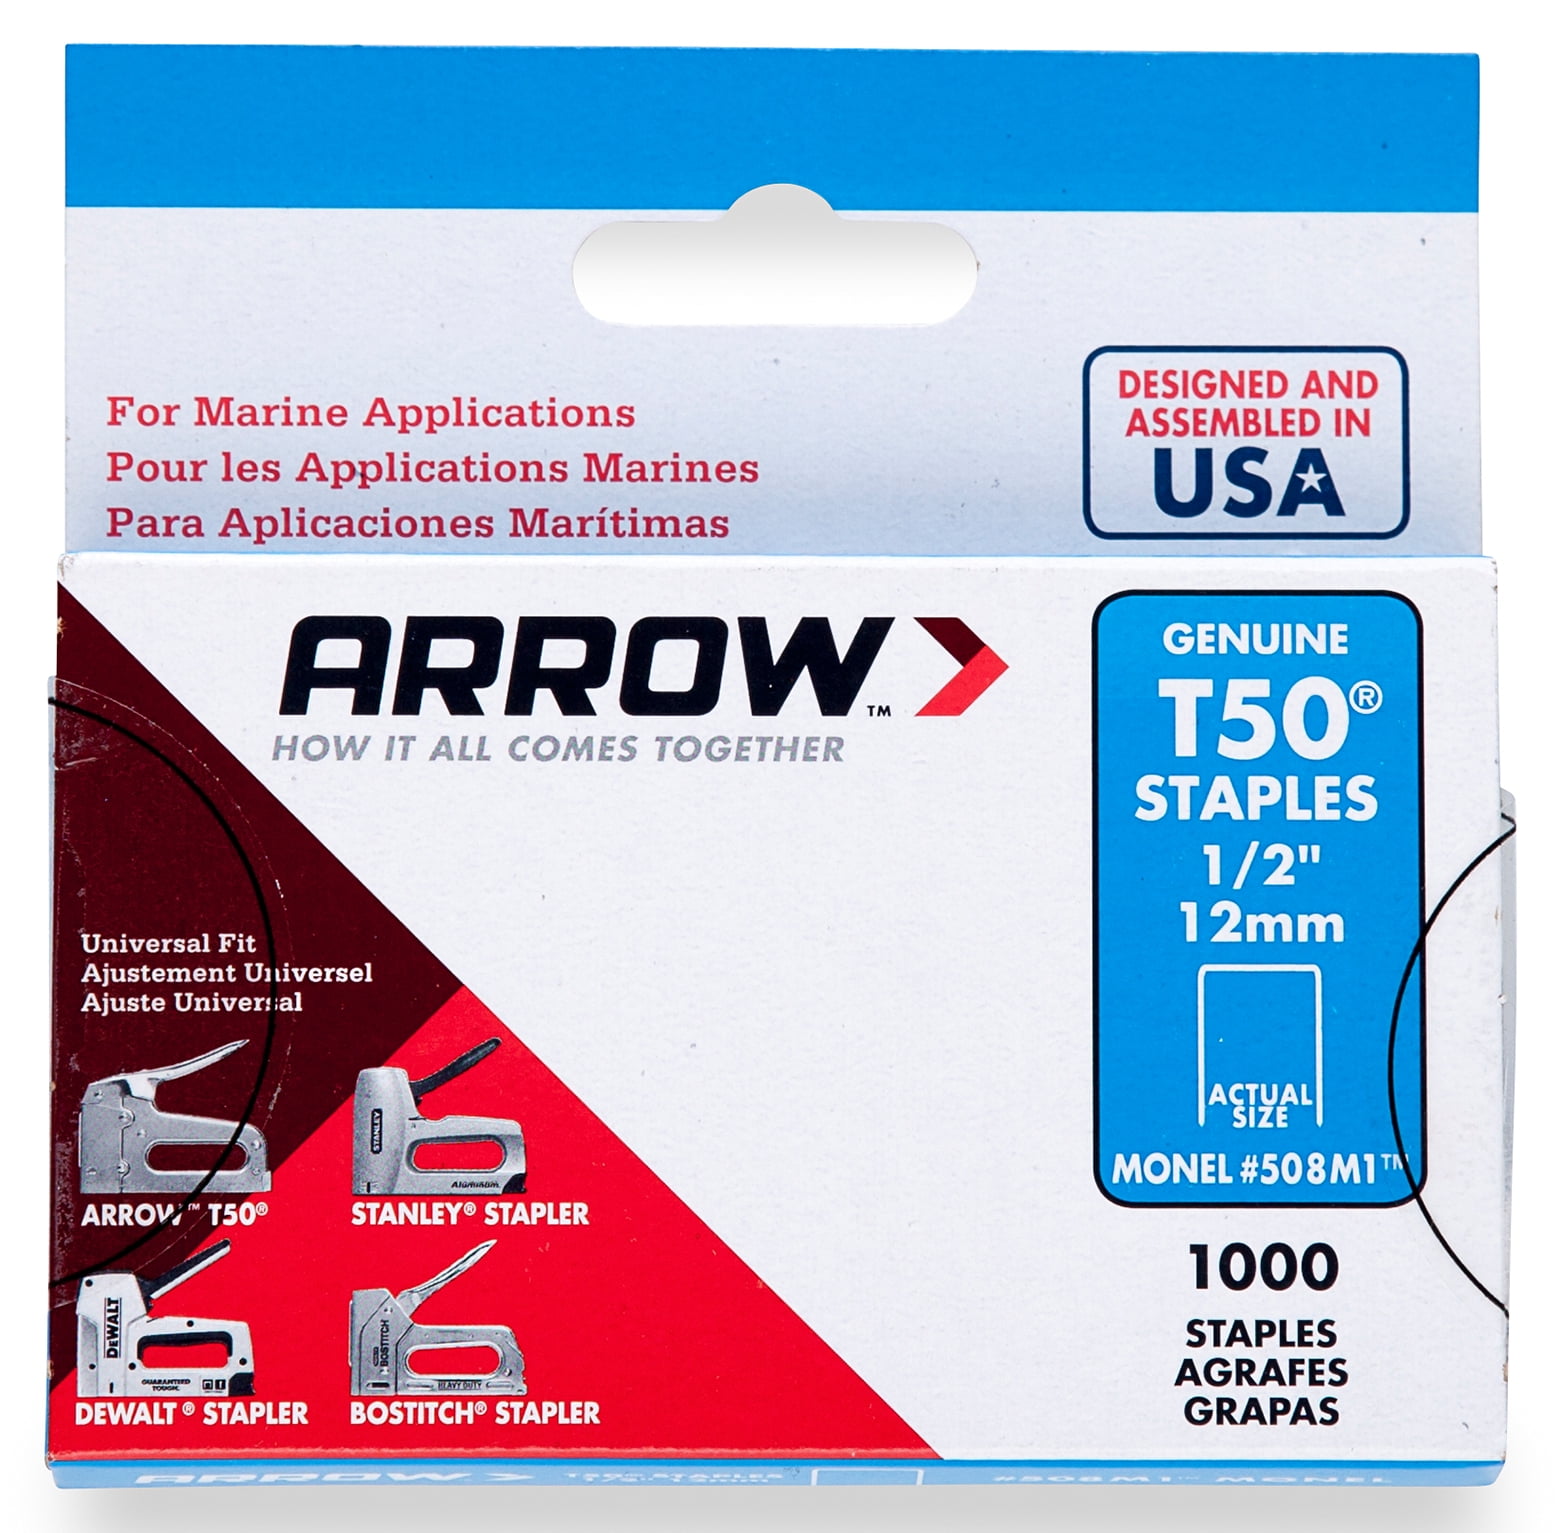 Arrow Fastener 5/16" T30 Staples 5 000 Count for sale online 